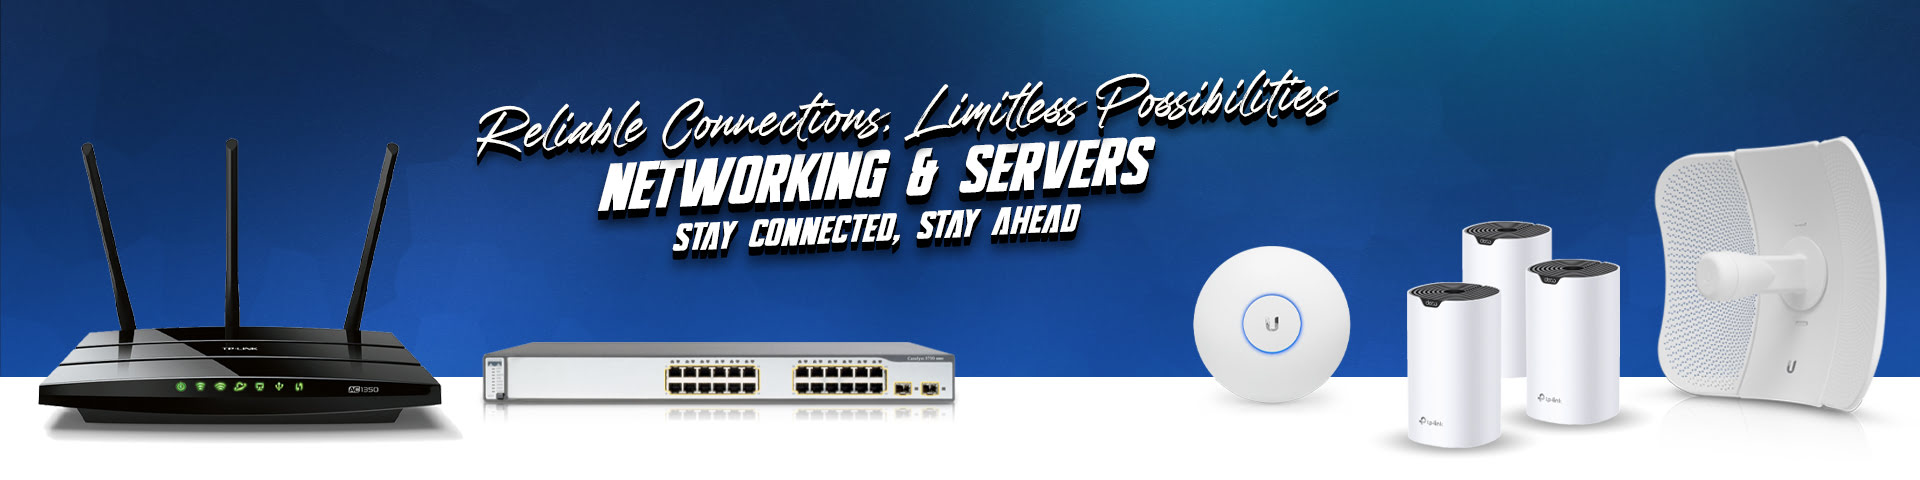 Networking & Servers